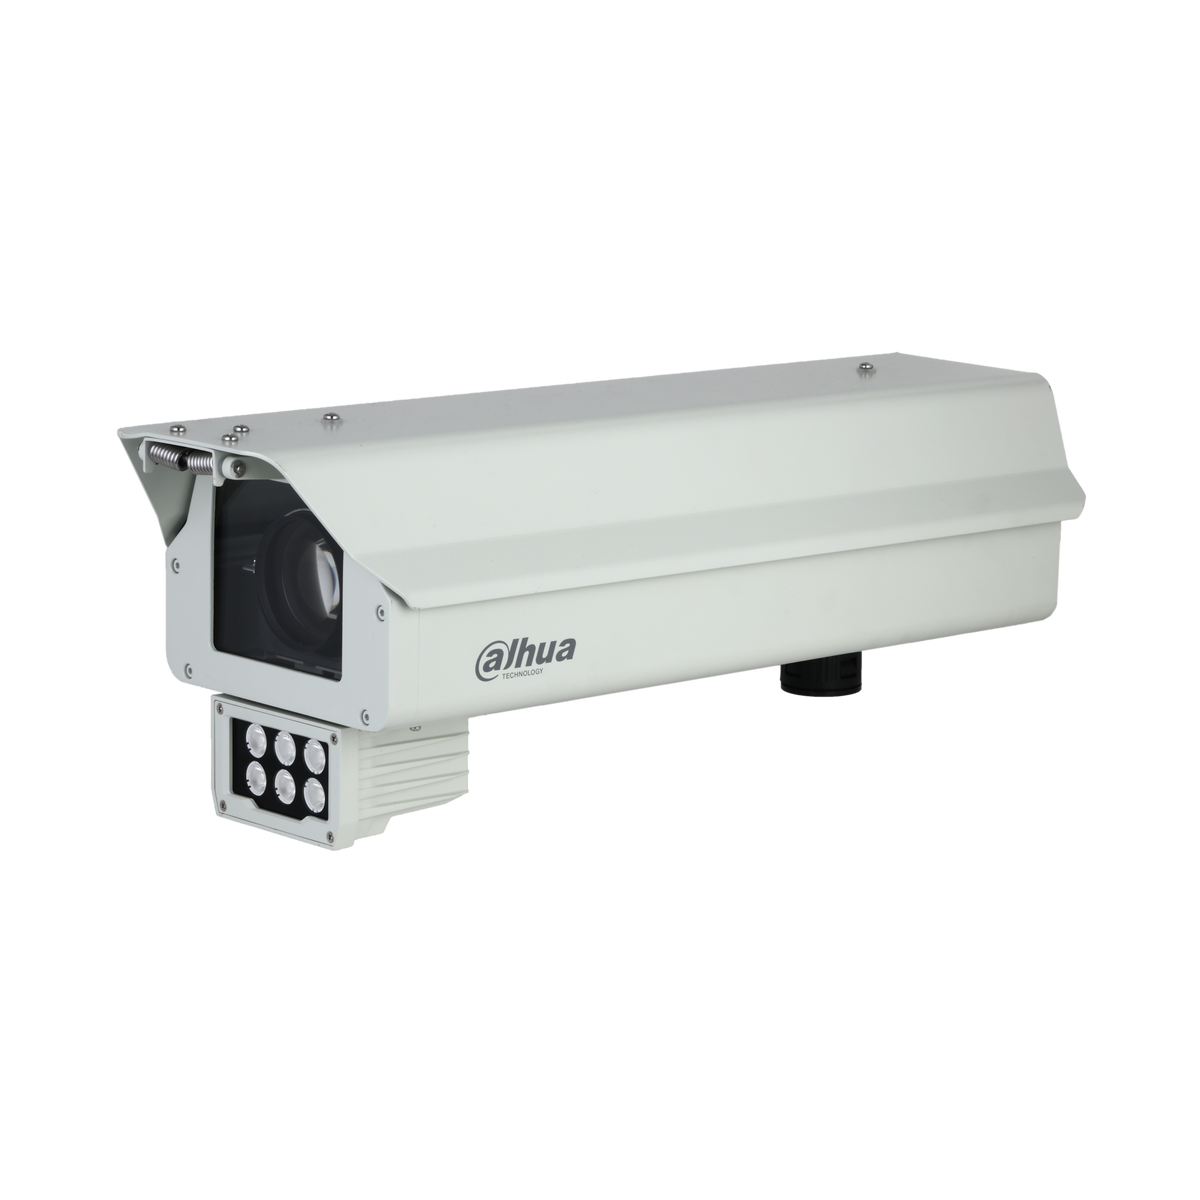 DAHUA ITC1652-AU5F-LZF1640 Dahua 16MP All-in-One Enforcement Camera